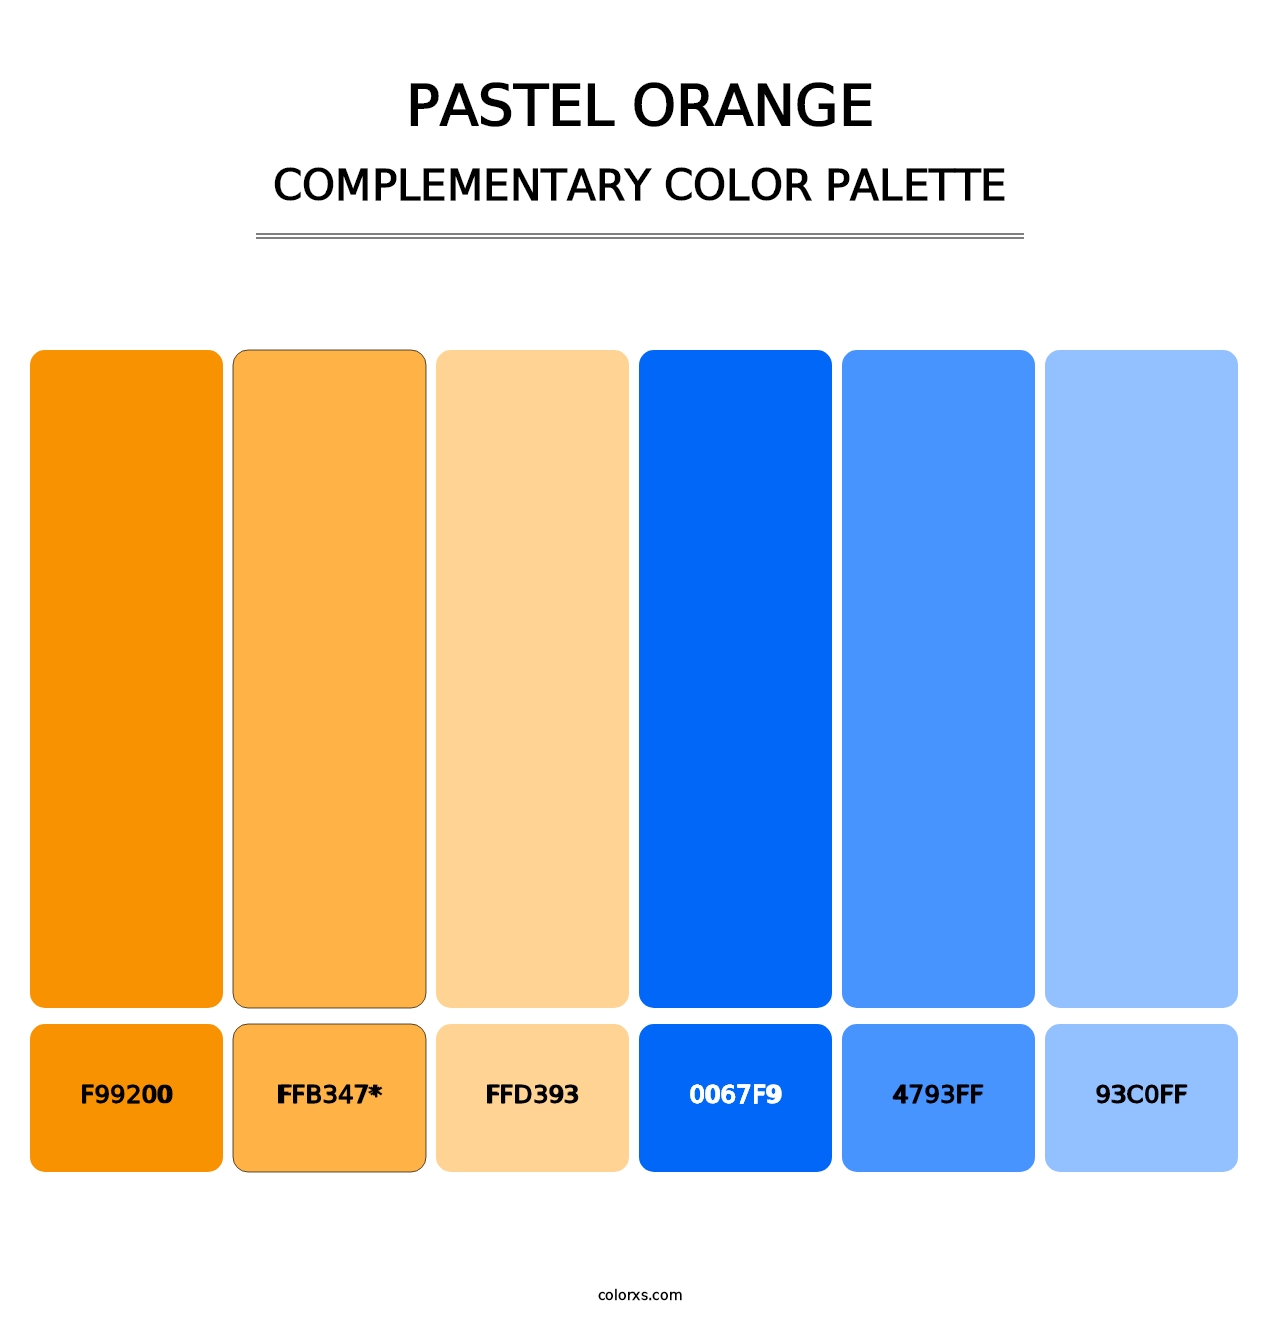 Pastel Orange - Complementary Color Palette